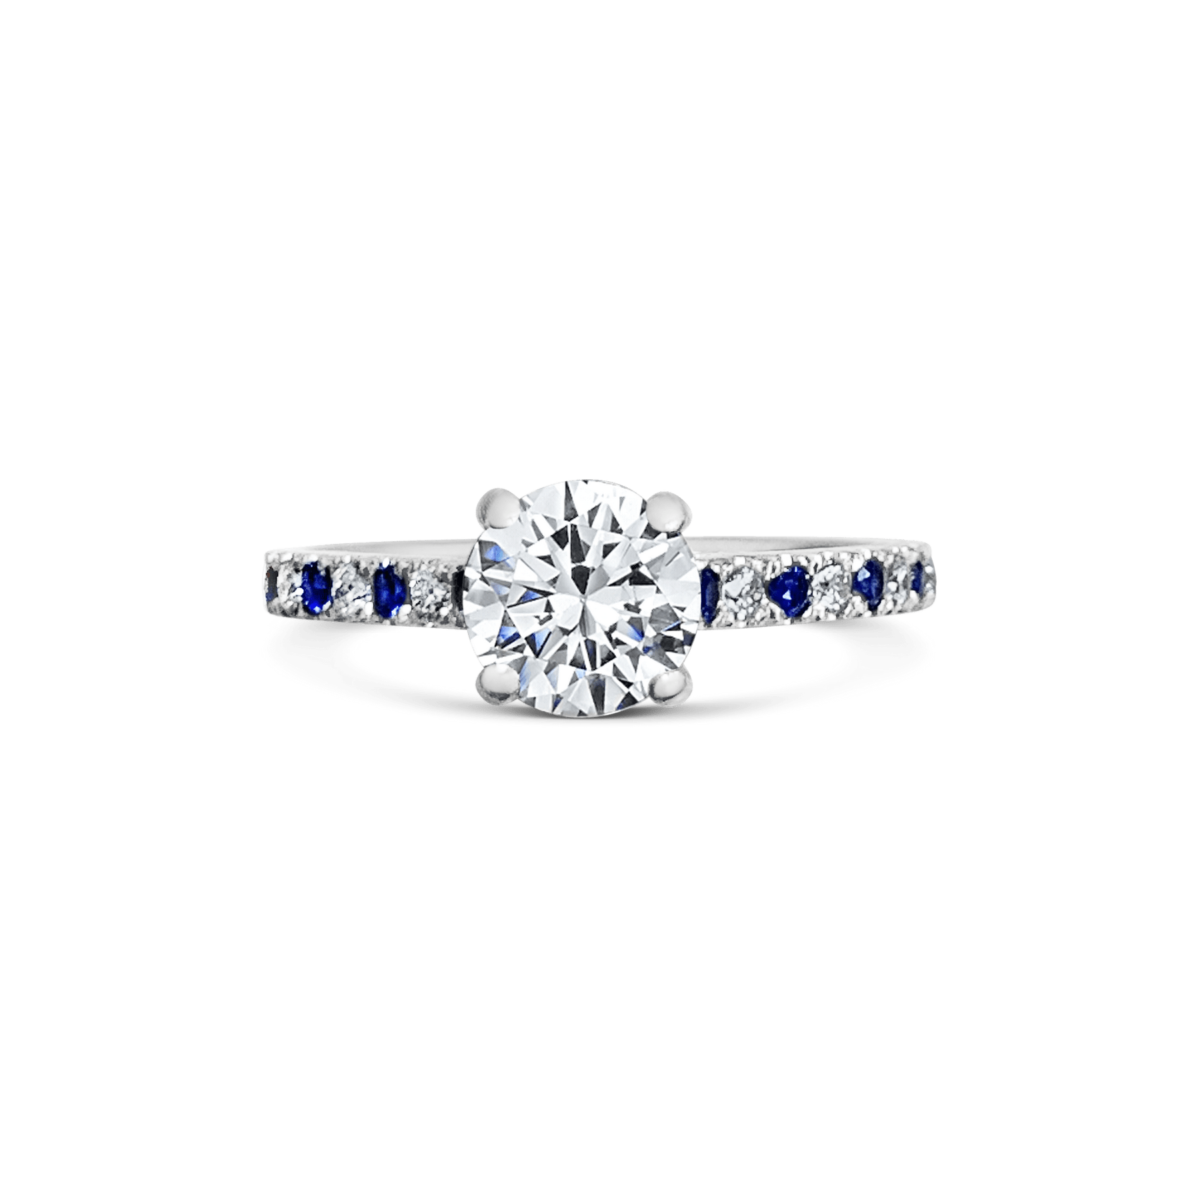 Emily Round Cut Diamond Microset Diamond & Sapphire Engagement Ring Front View1